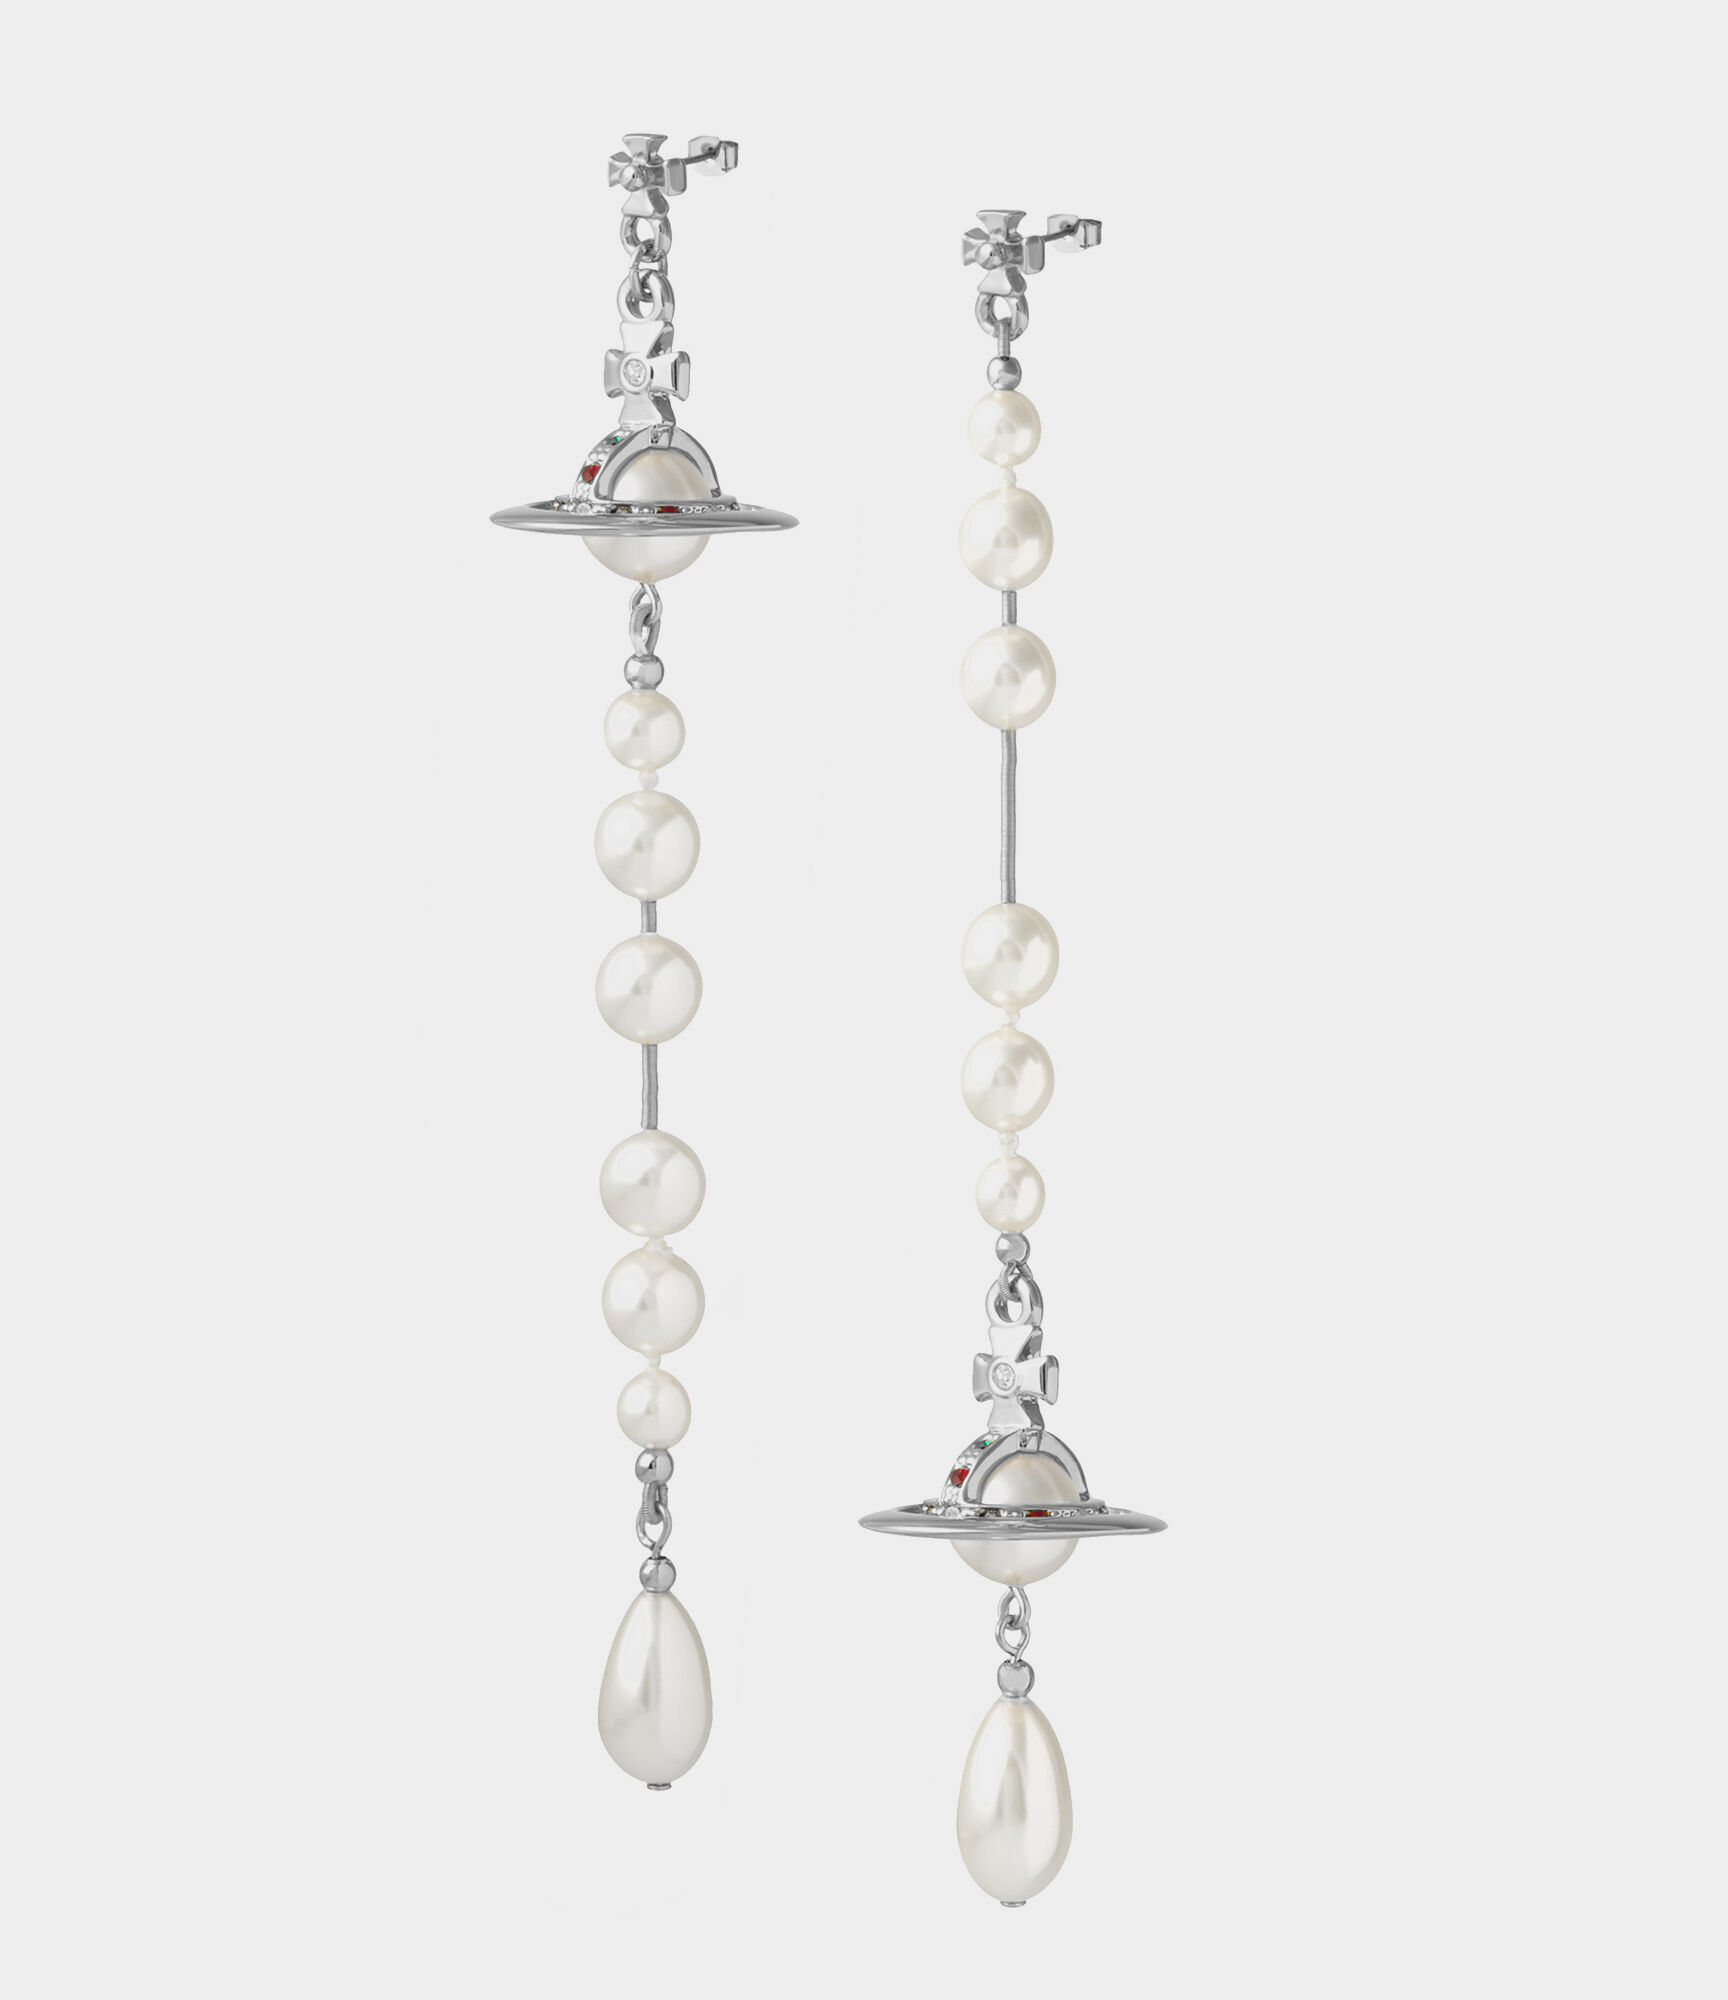 Broken pearl necklace 破碎珍珠项链£340.00 超值好货| 北美省钱快报